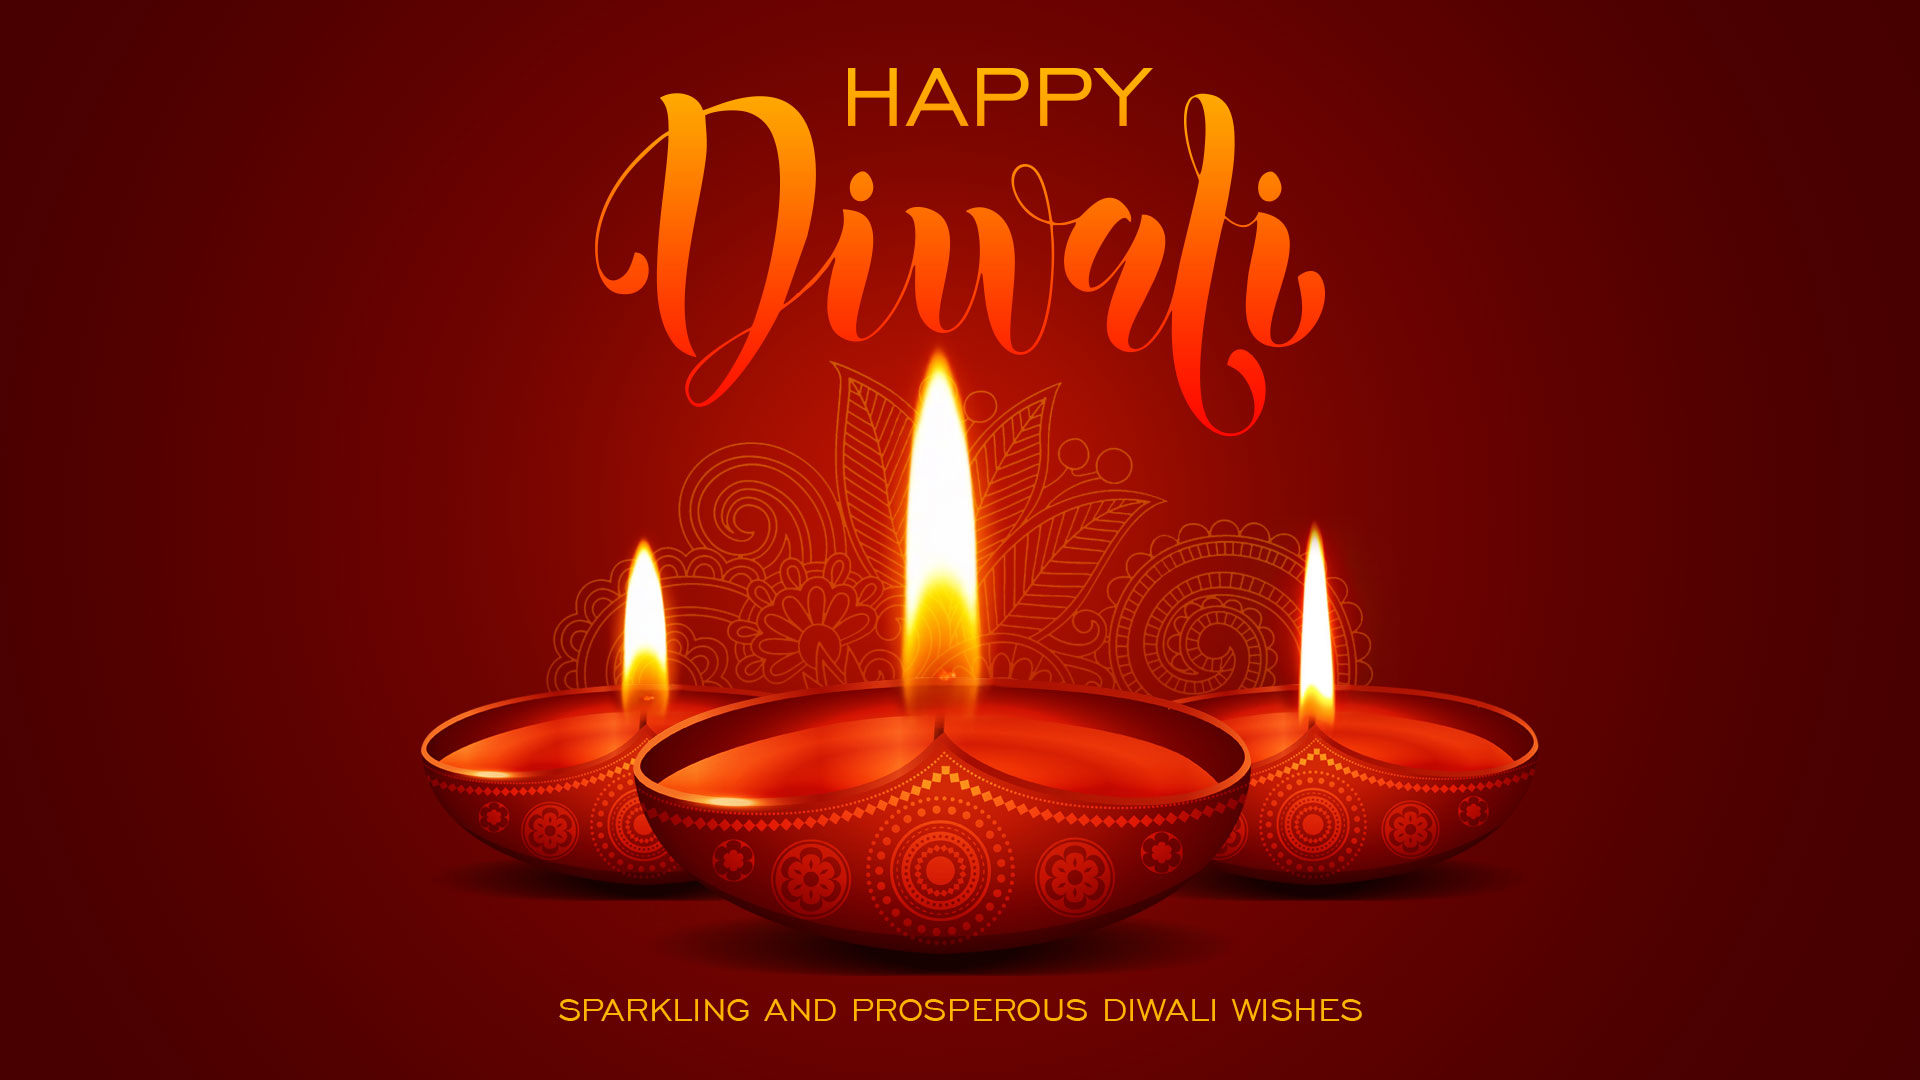 Diwali Greetings Cards Happy Diwali